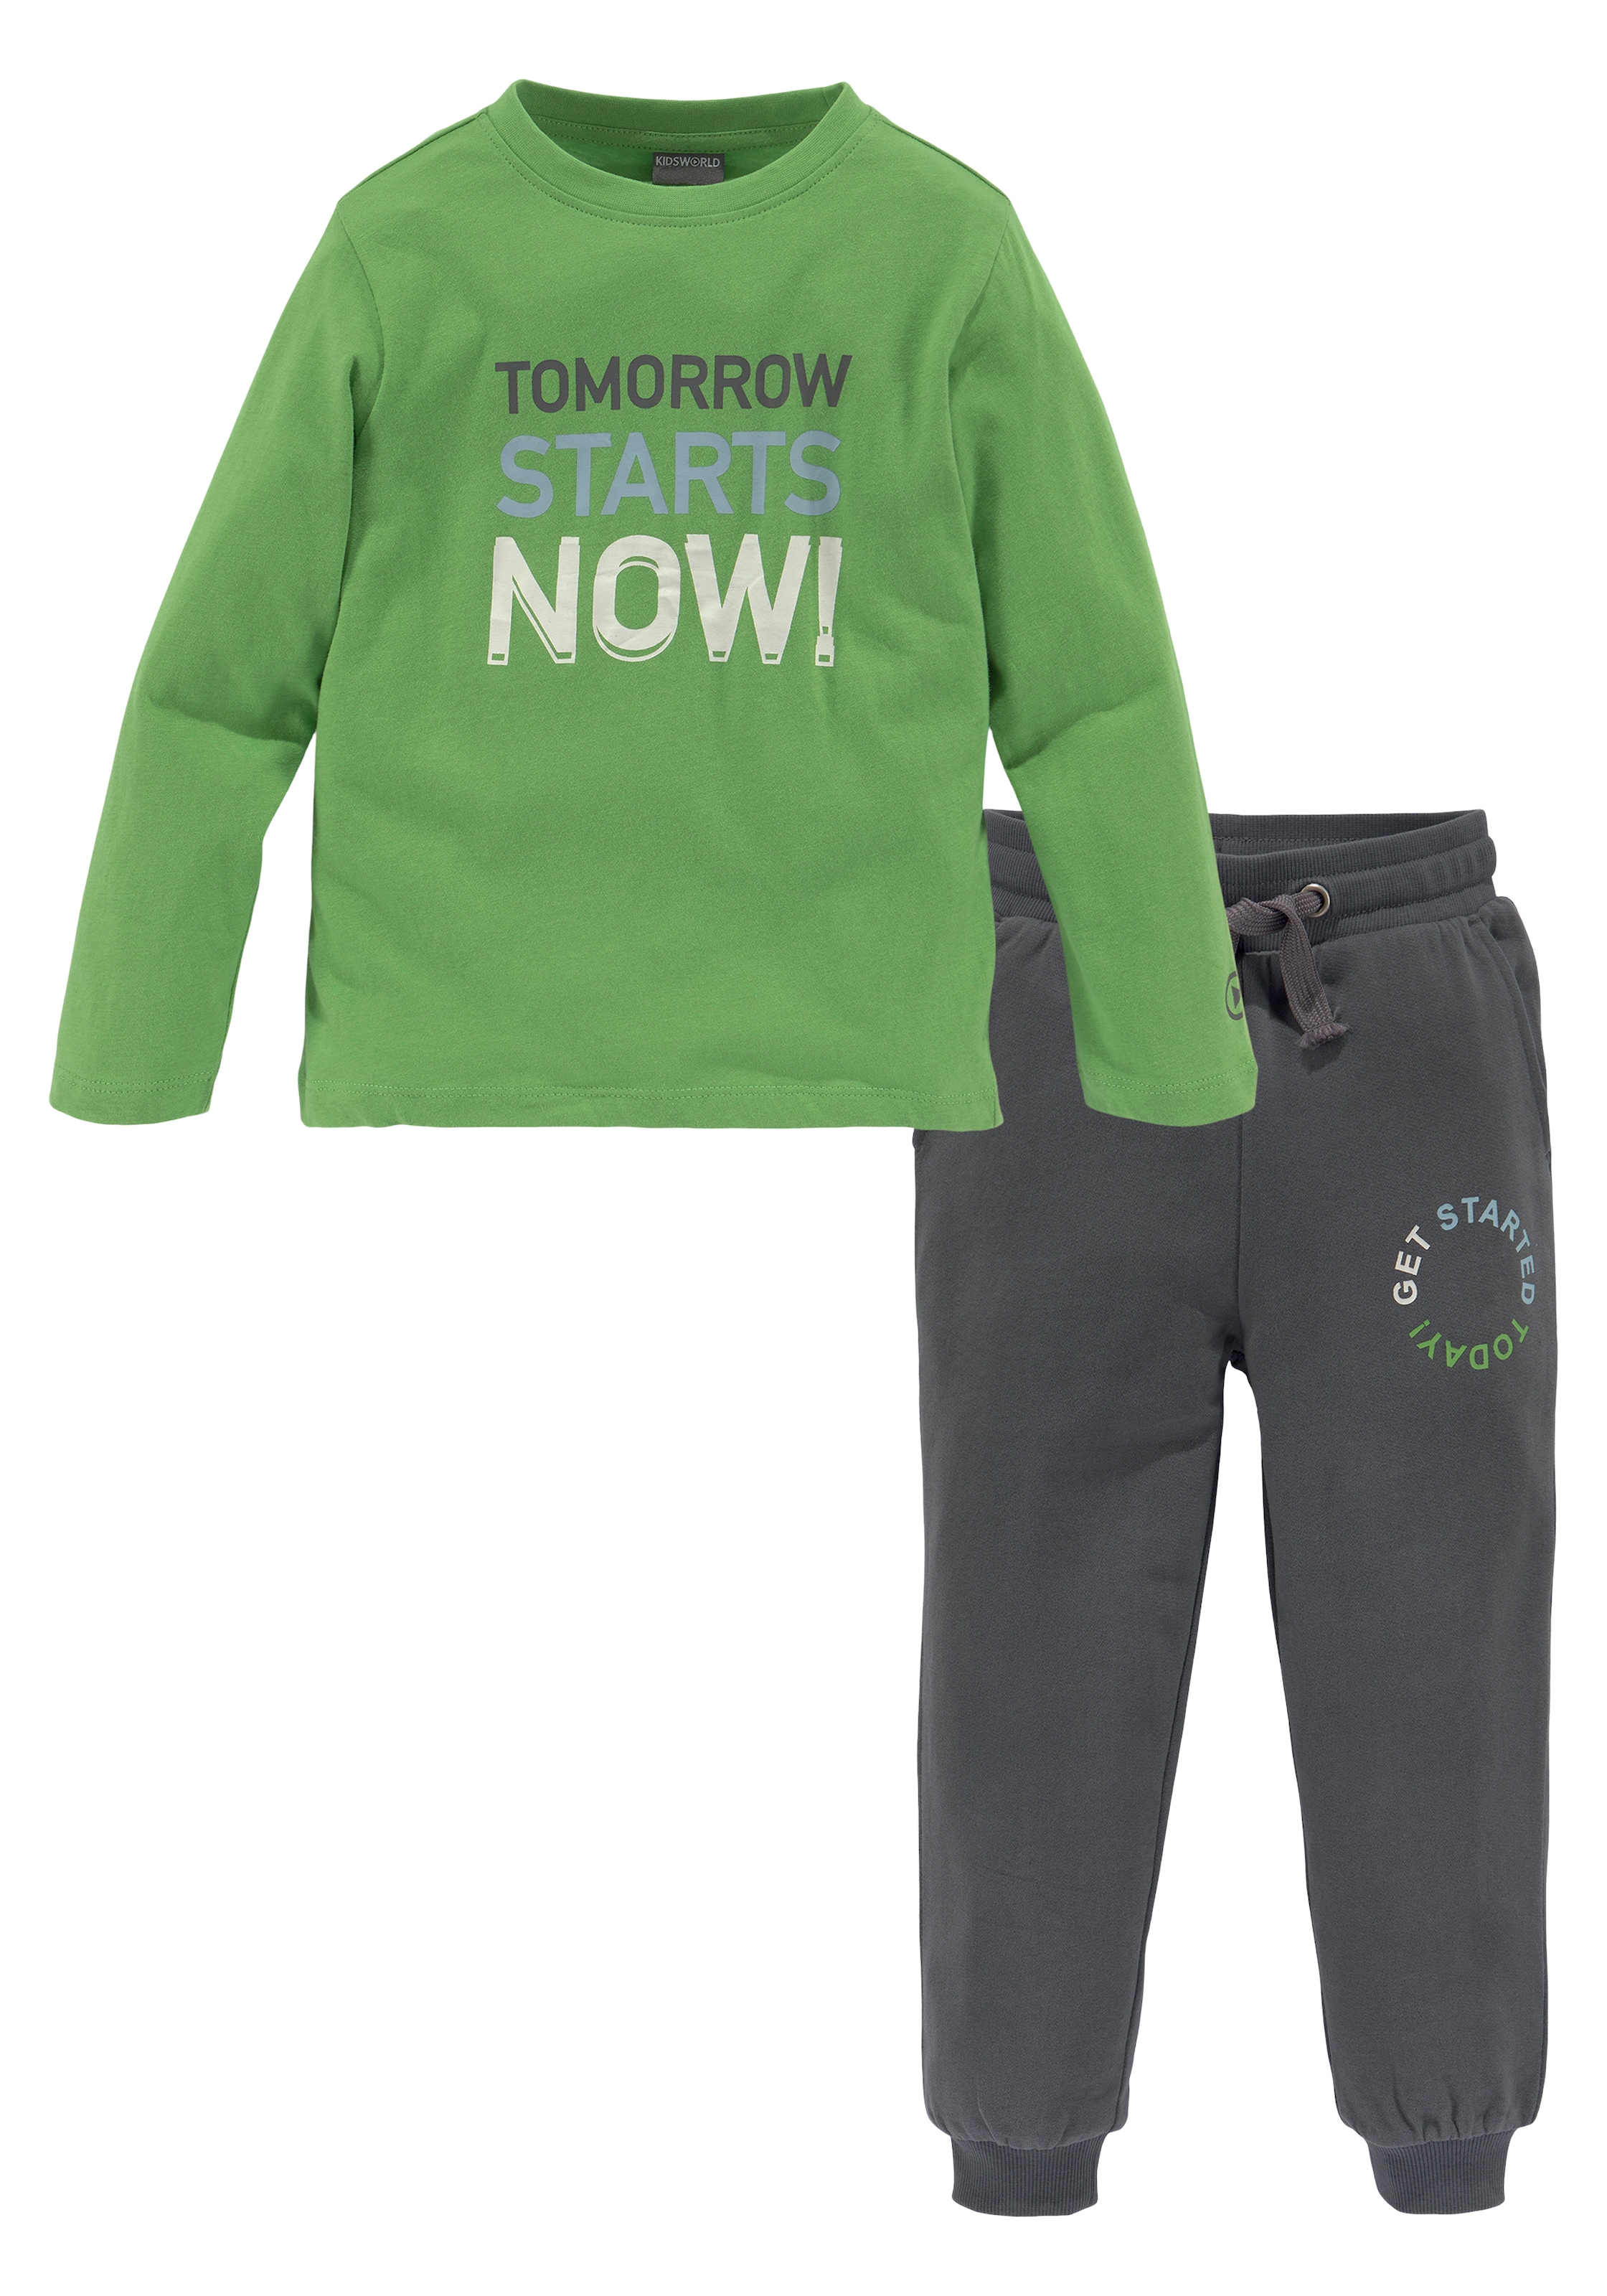 KIDSWORLD Shirt & NOW«, Shop LA-Shirt STARTS tlg., Spruch »TOMORROW (Set, Hose OTTO 2 im Online Jogginghose), 